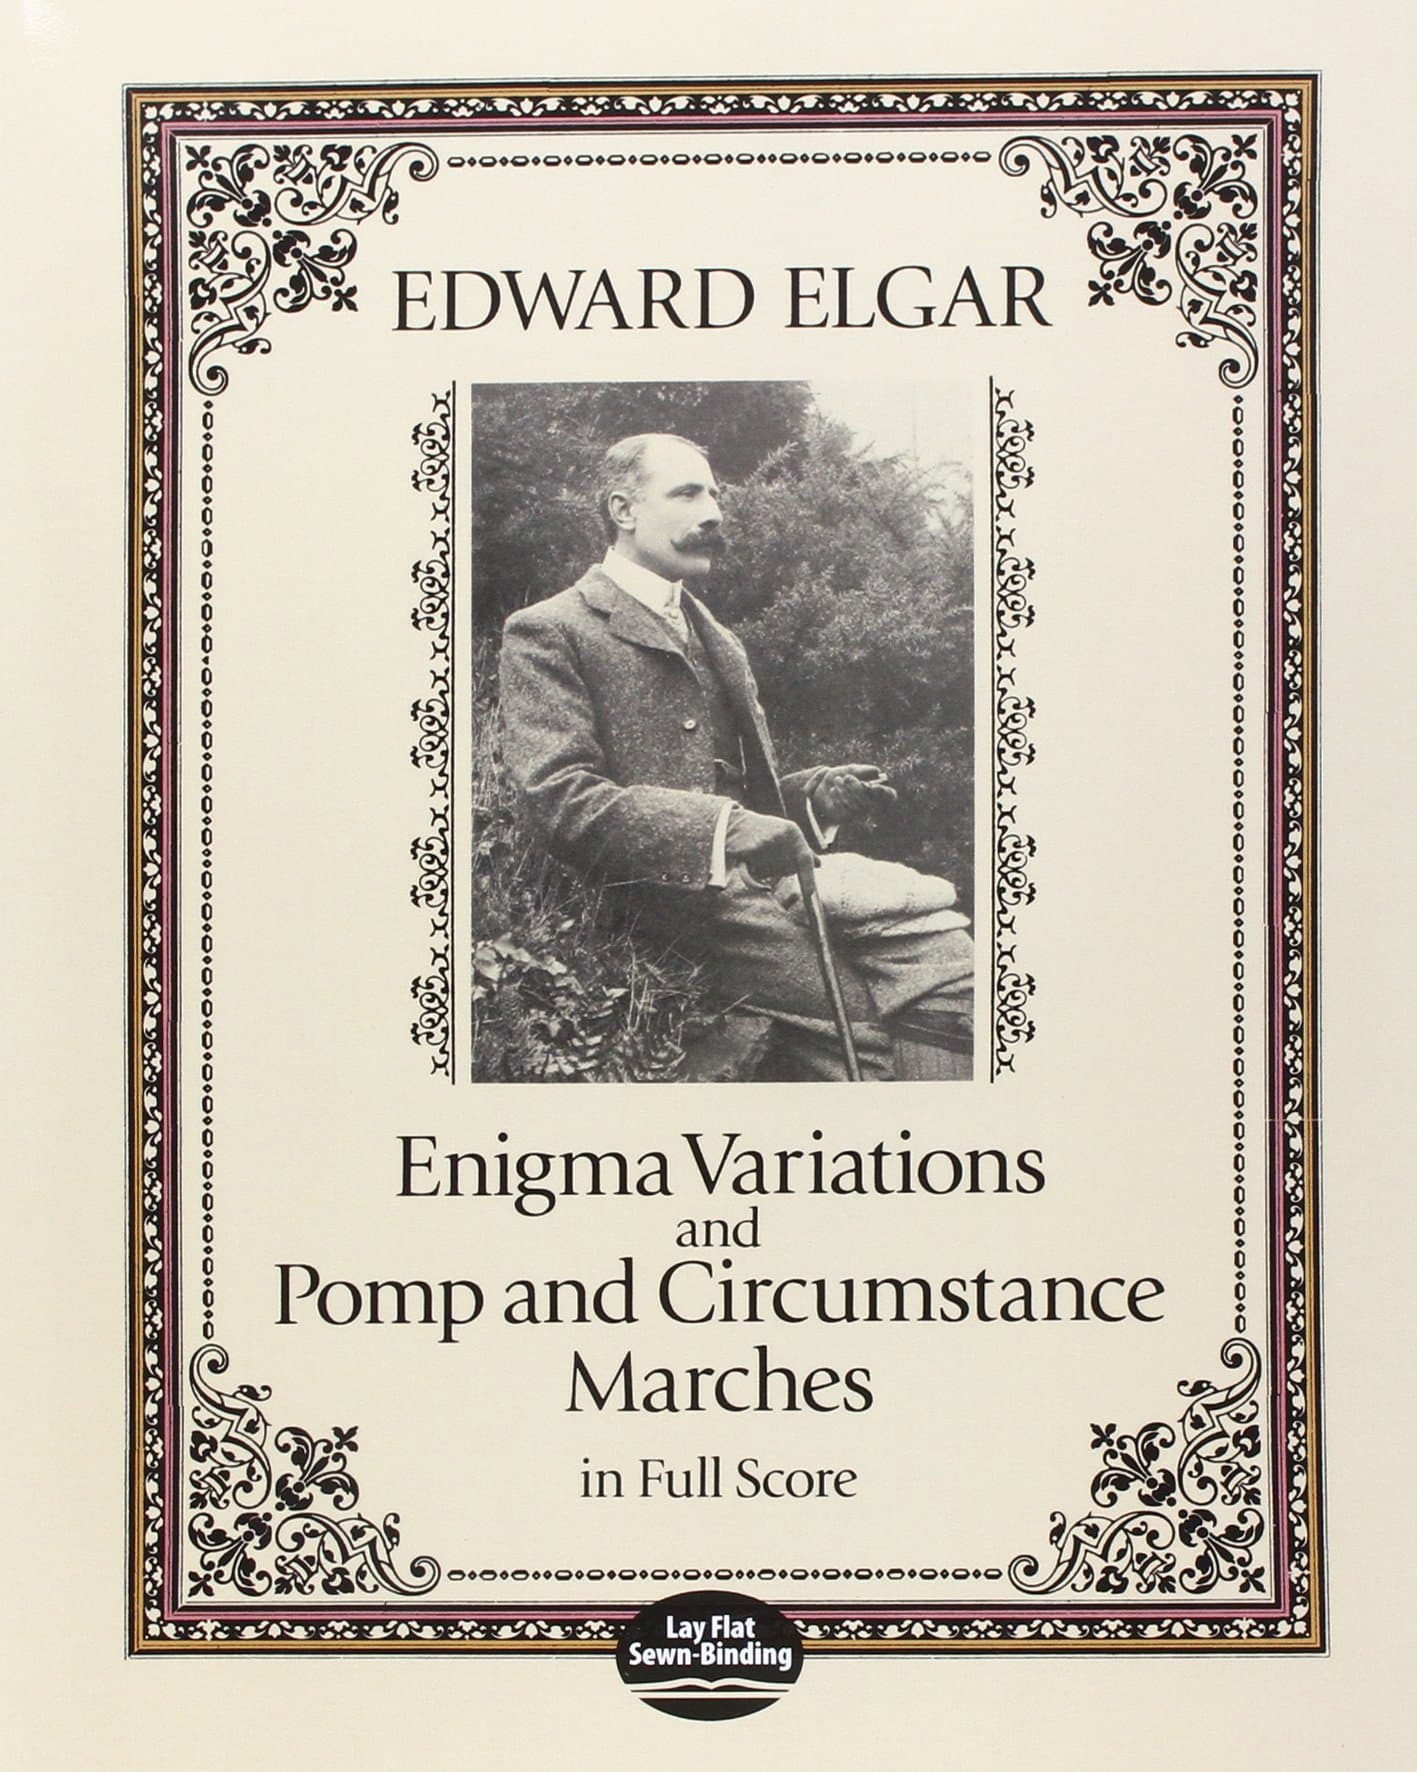 Elgar's Pomp and Circumstance